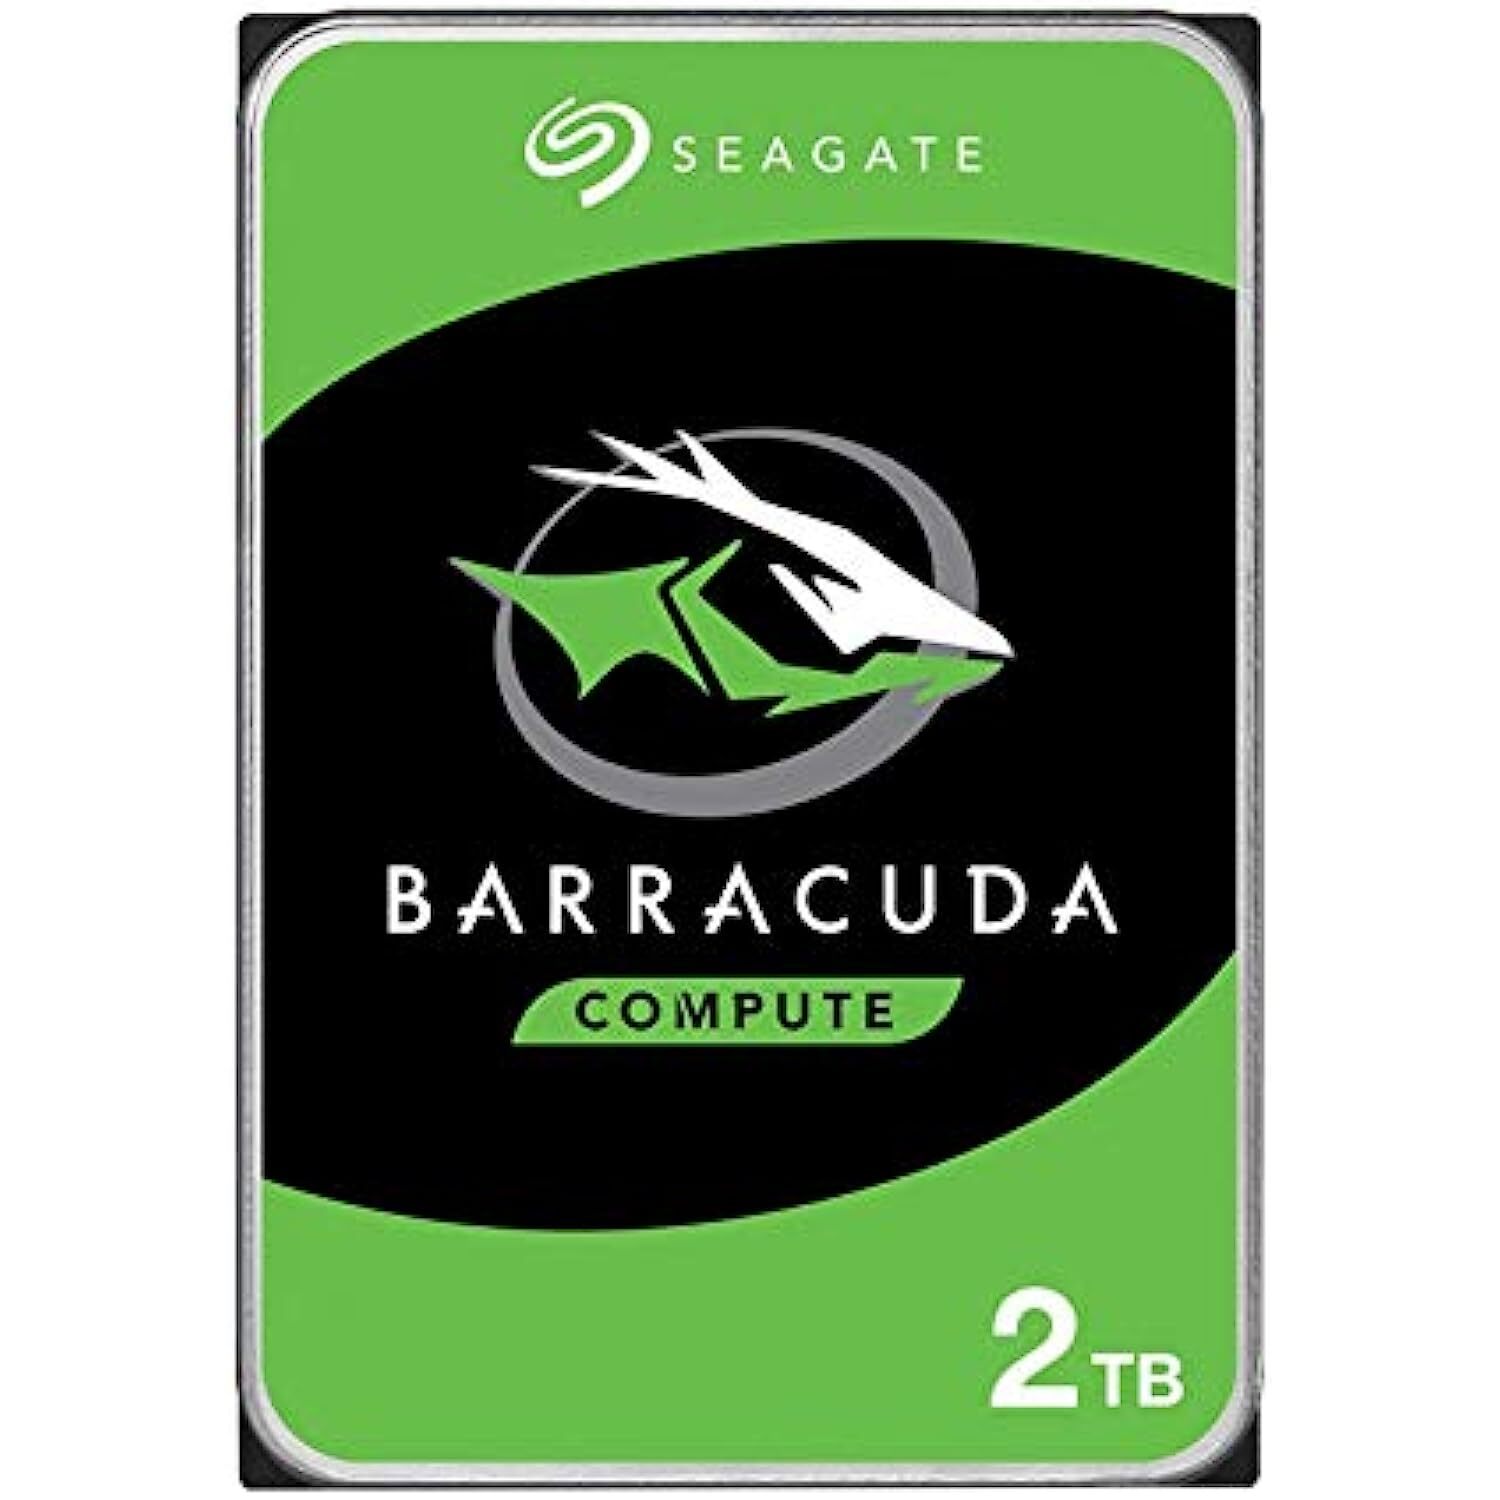 Seagate Barracuda 2 TB Internal Hard Drive HDD    8.89 cm (3.5 Inch) SATA 6 Gb/s 5400 RPM 256 MB Cache for Computer Desktop PC (ST2000DM005)